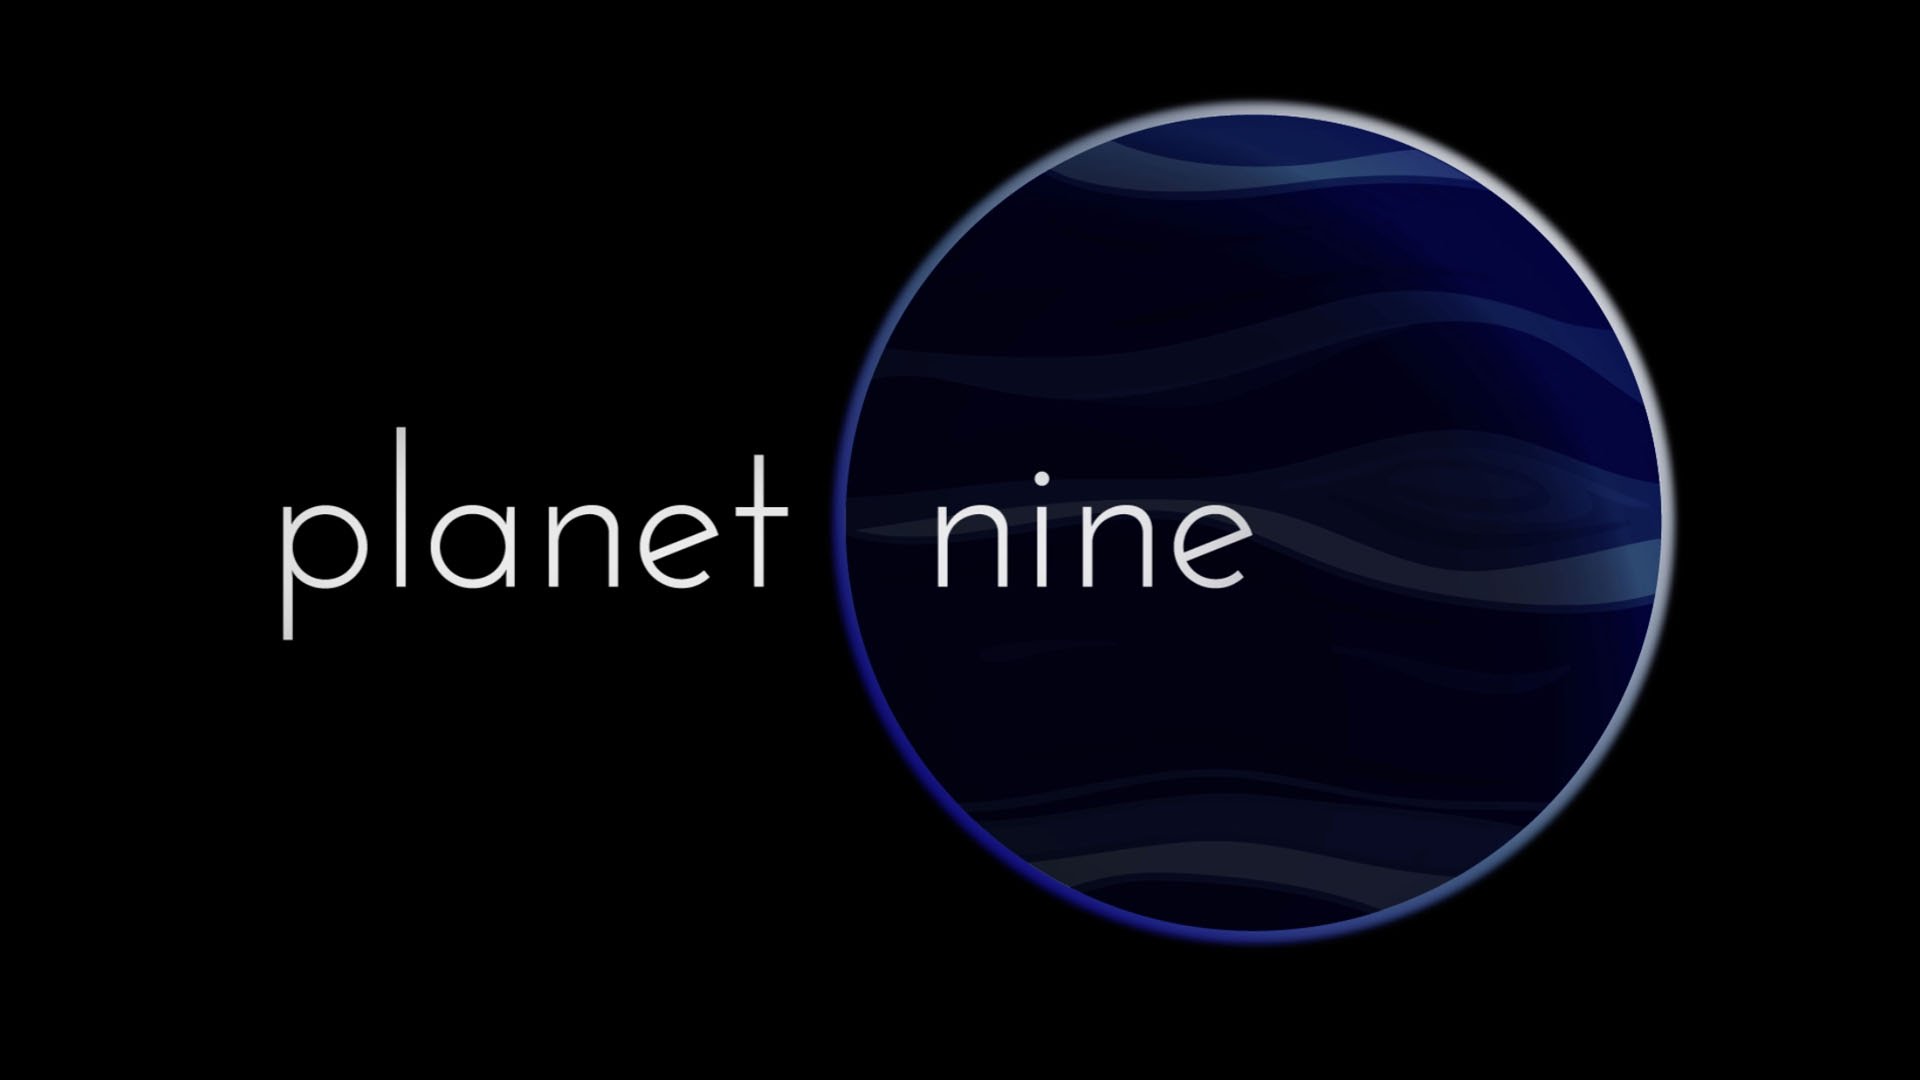 Planet 9